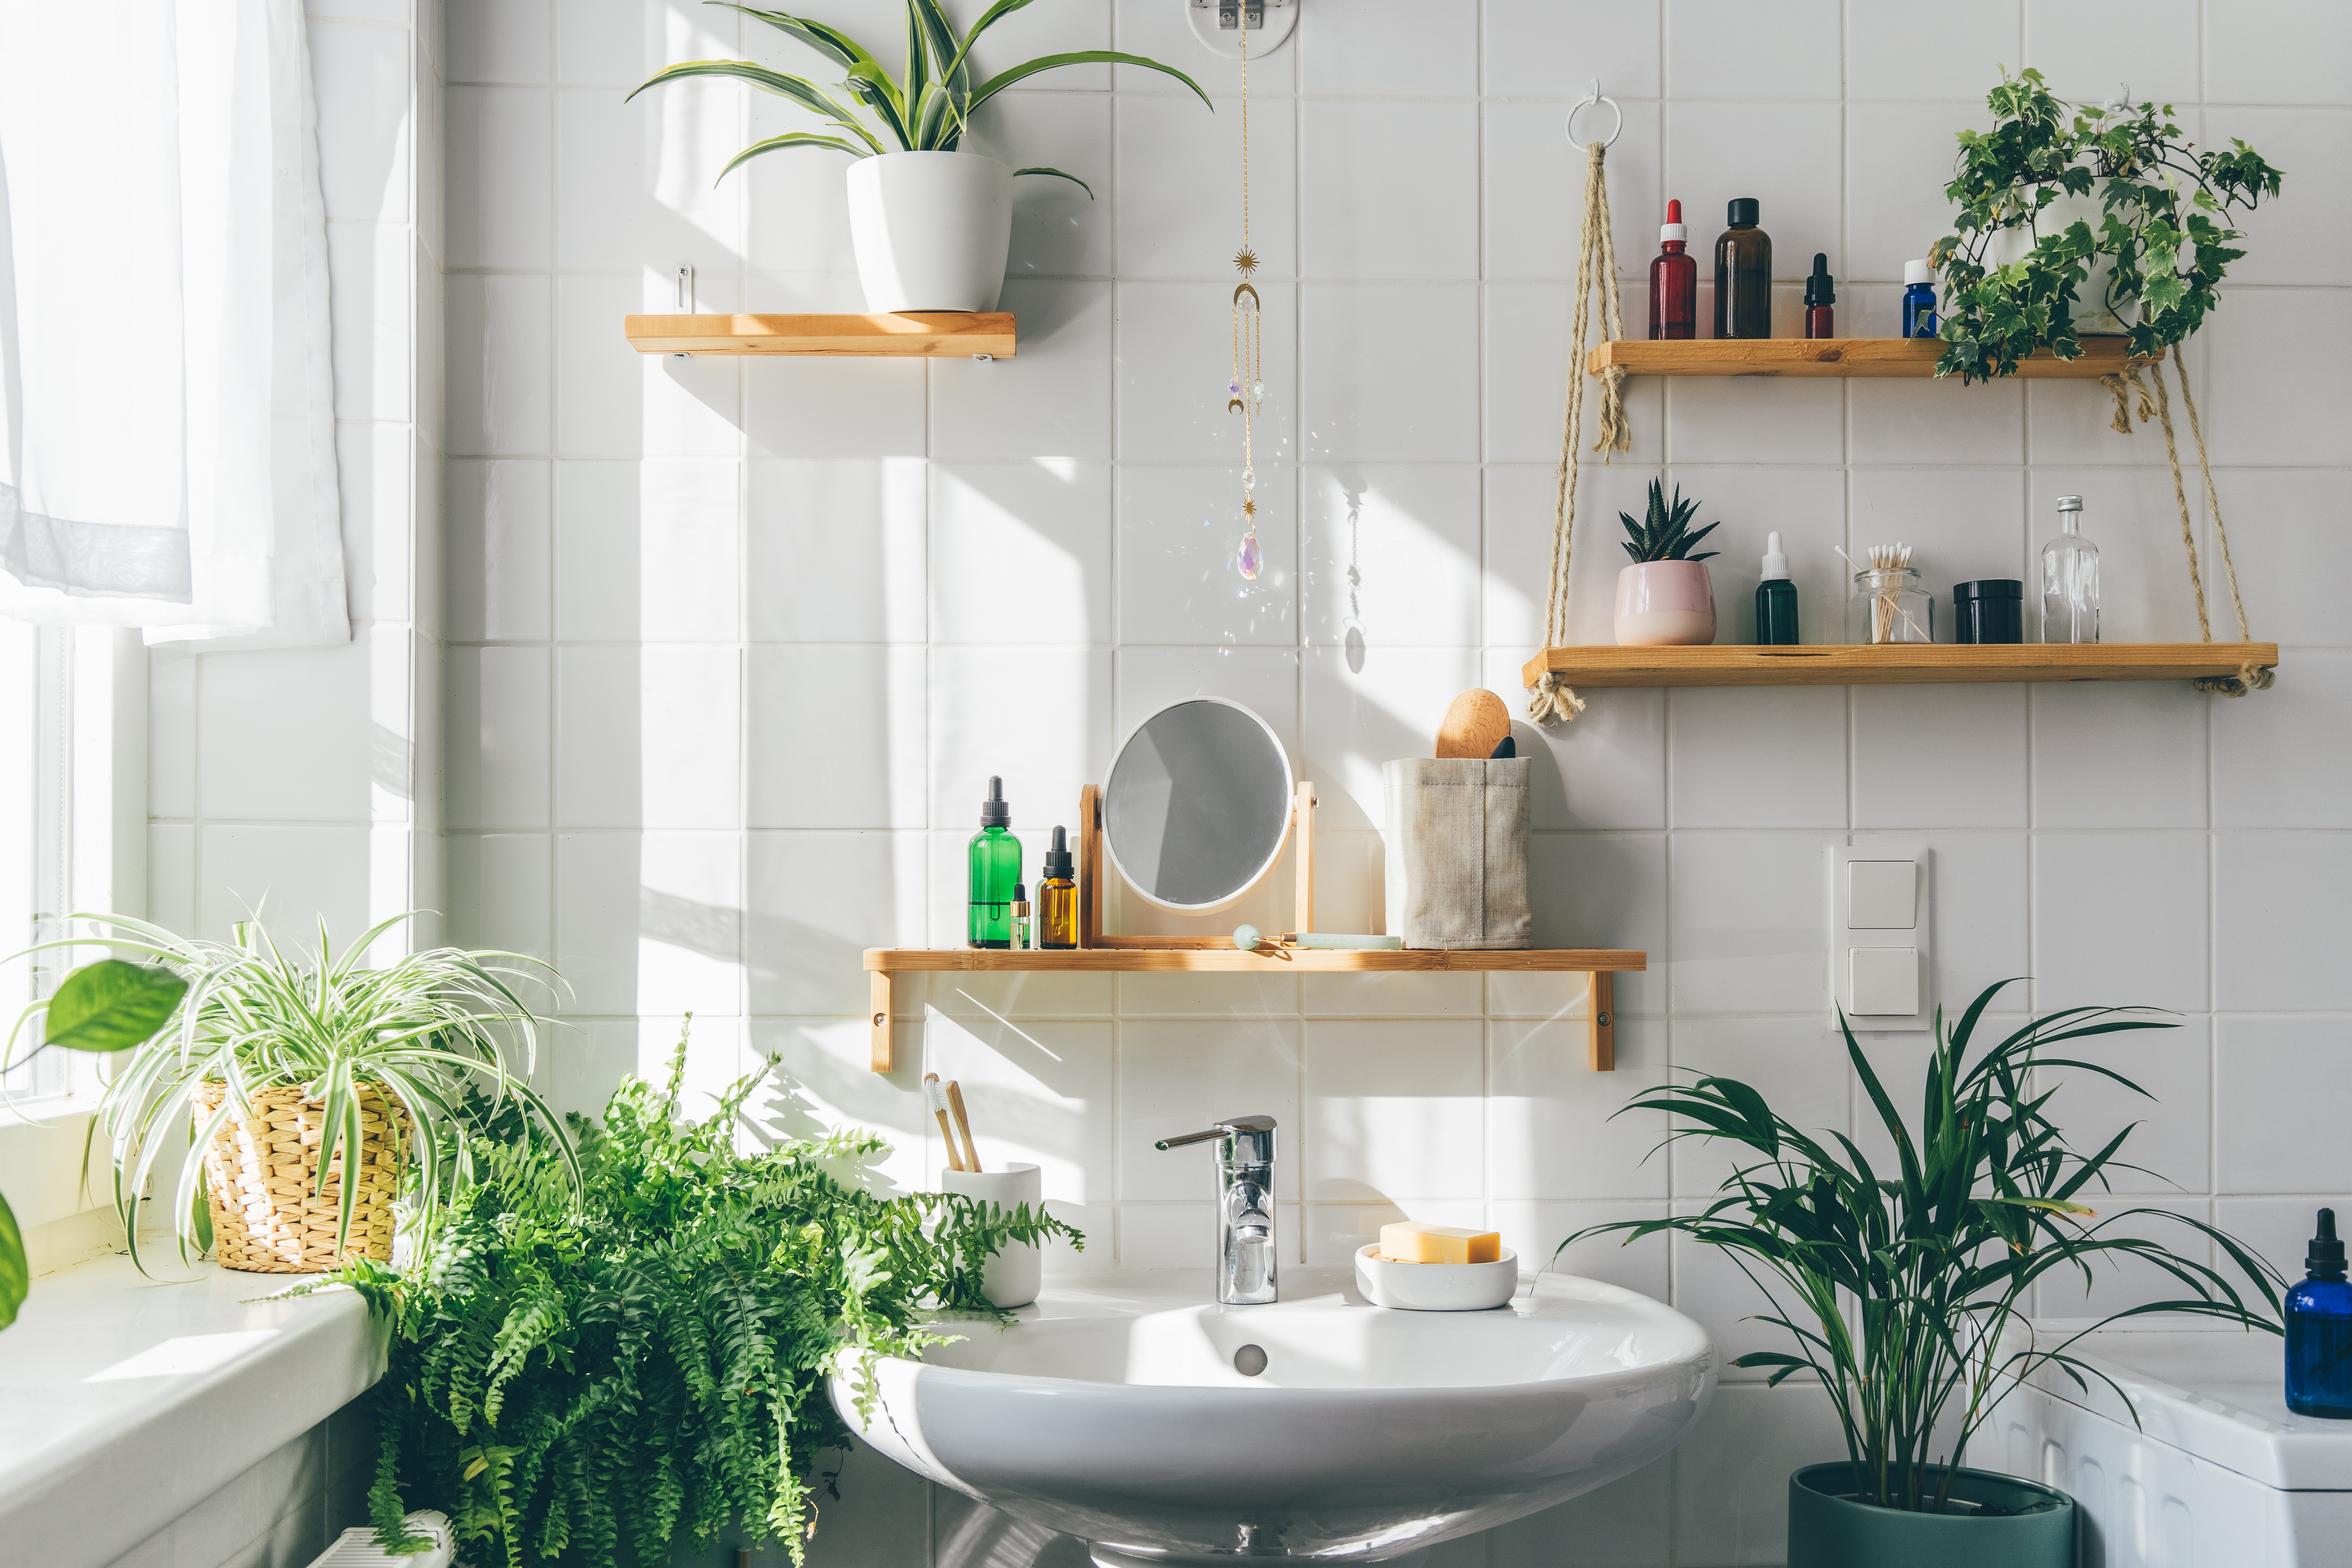 Bathroom with plants. | Source: Shutterstock